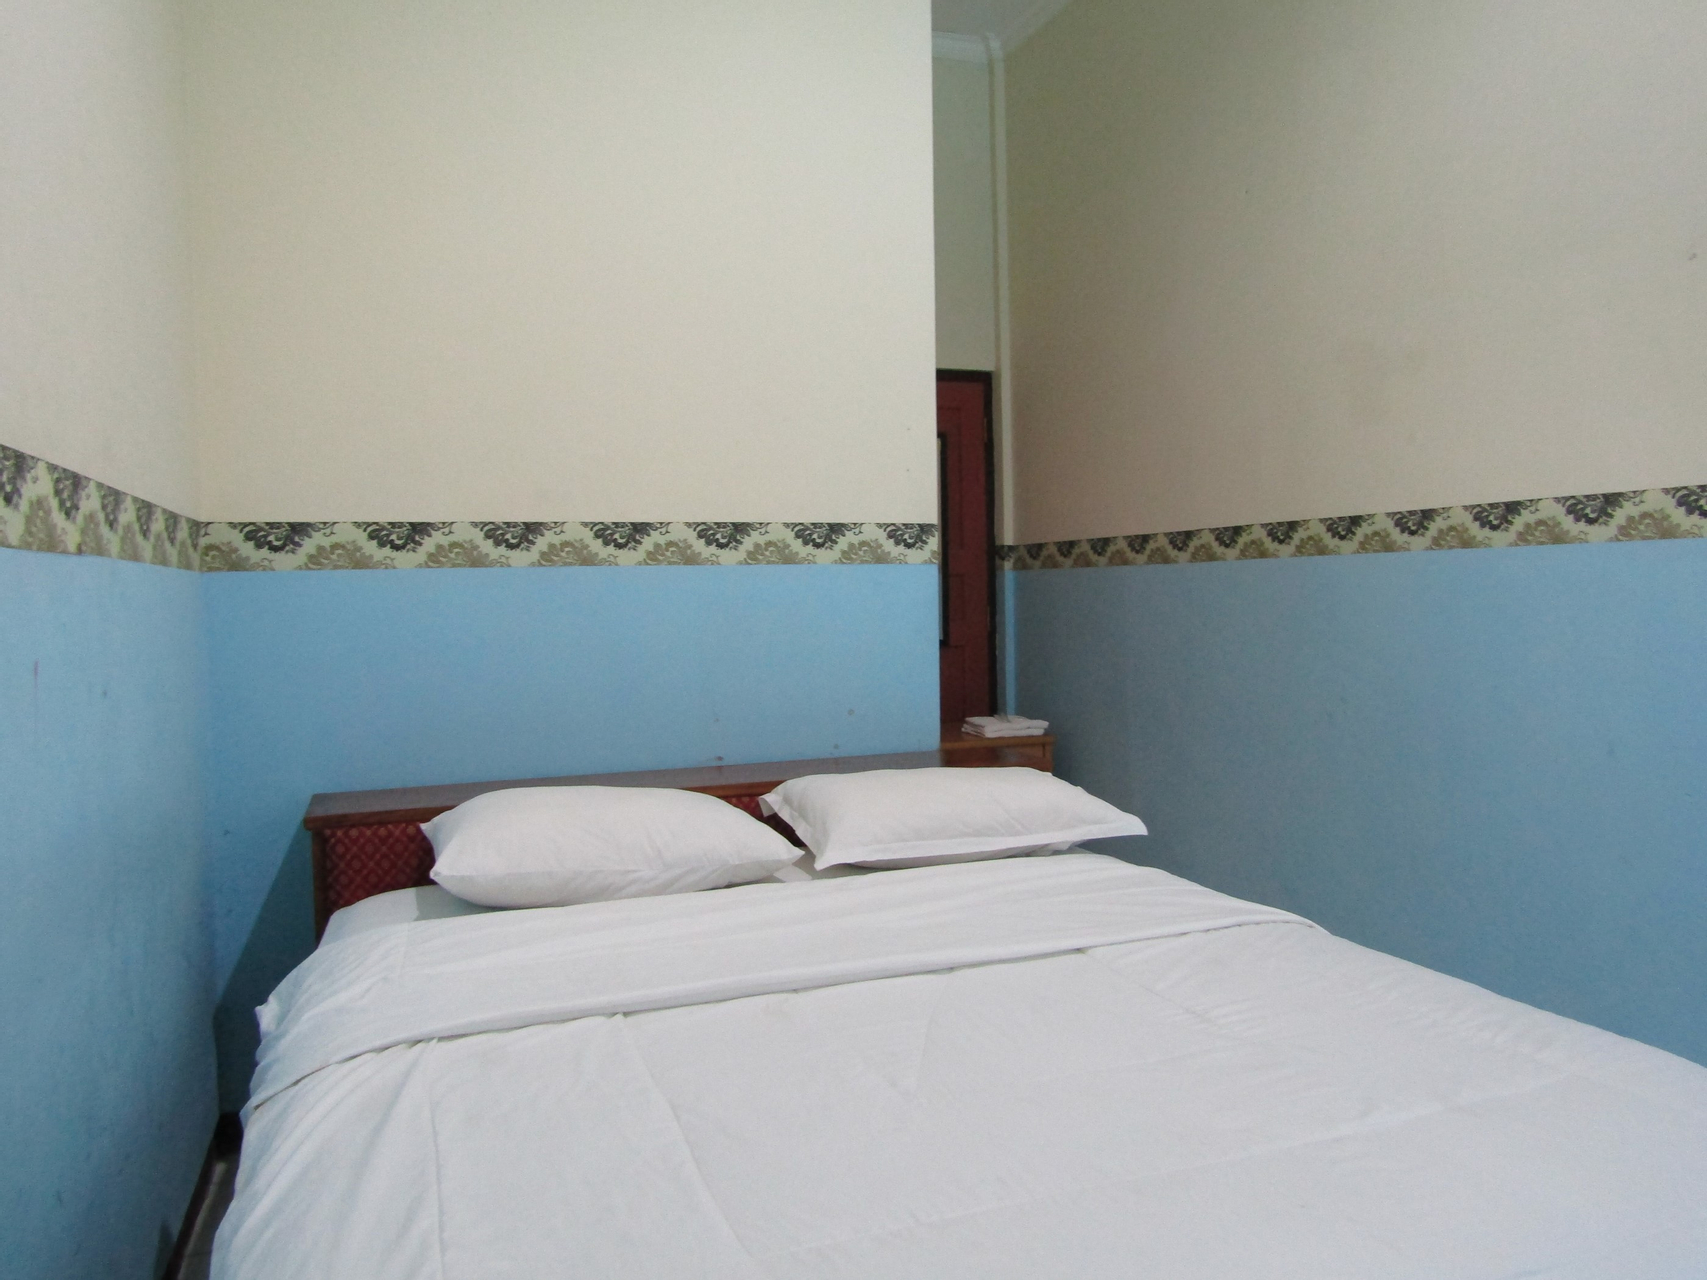 Bedroom 3, BIP Hotel Tawangmangu, Karanganyar